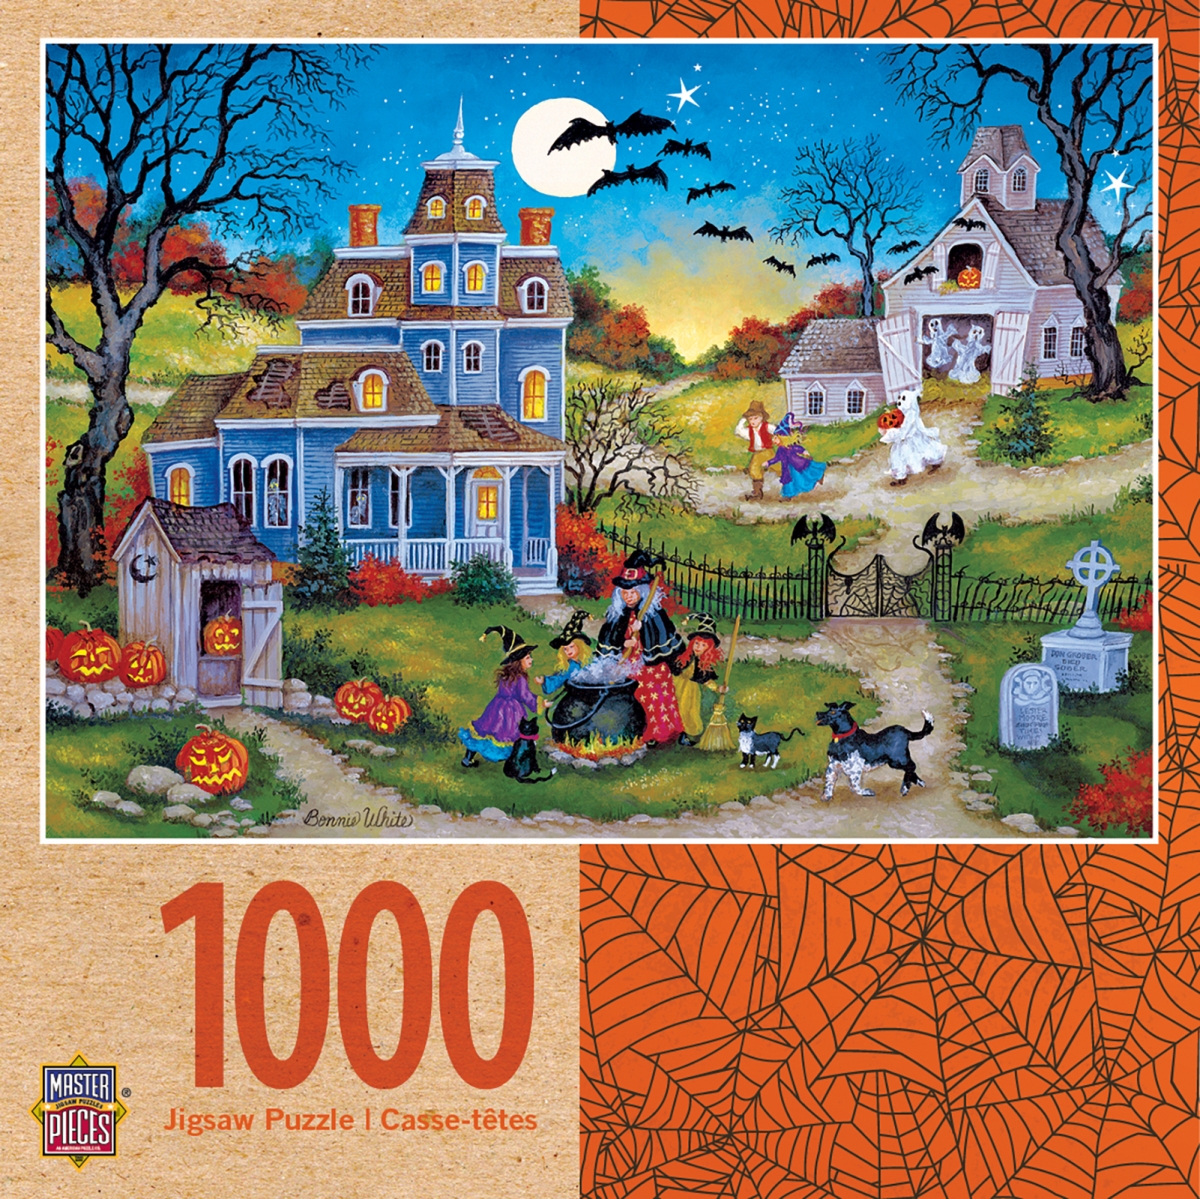 71823 19.25 X 26.75 In. Bonnie White Halloween Three Little Witches Jigsaw Puzzle - 1000 Piece